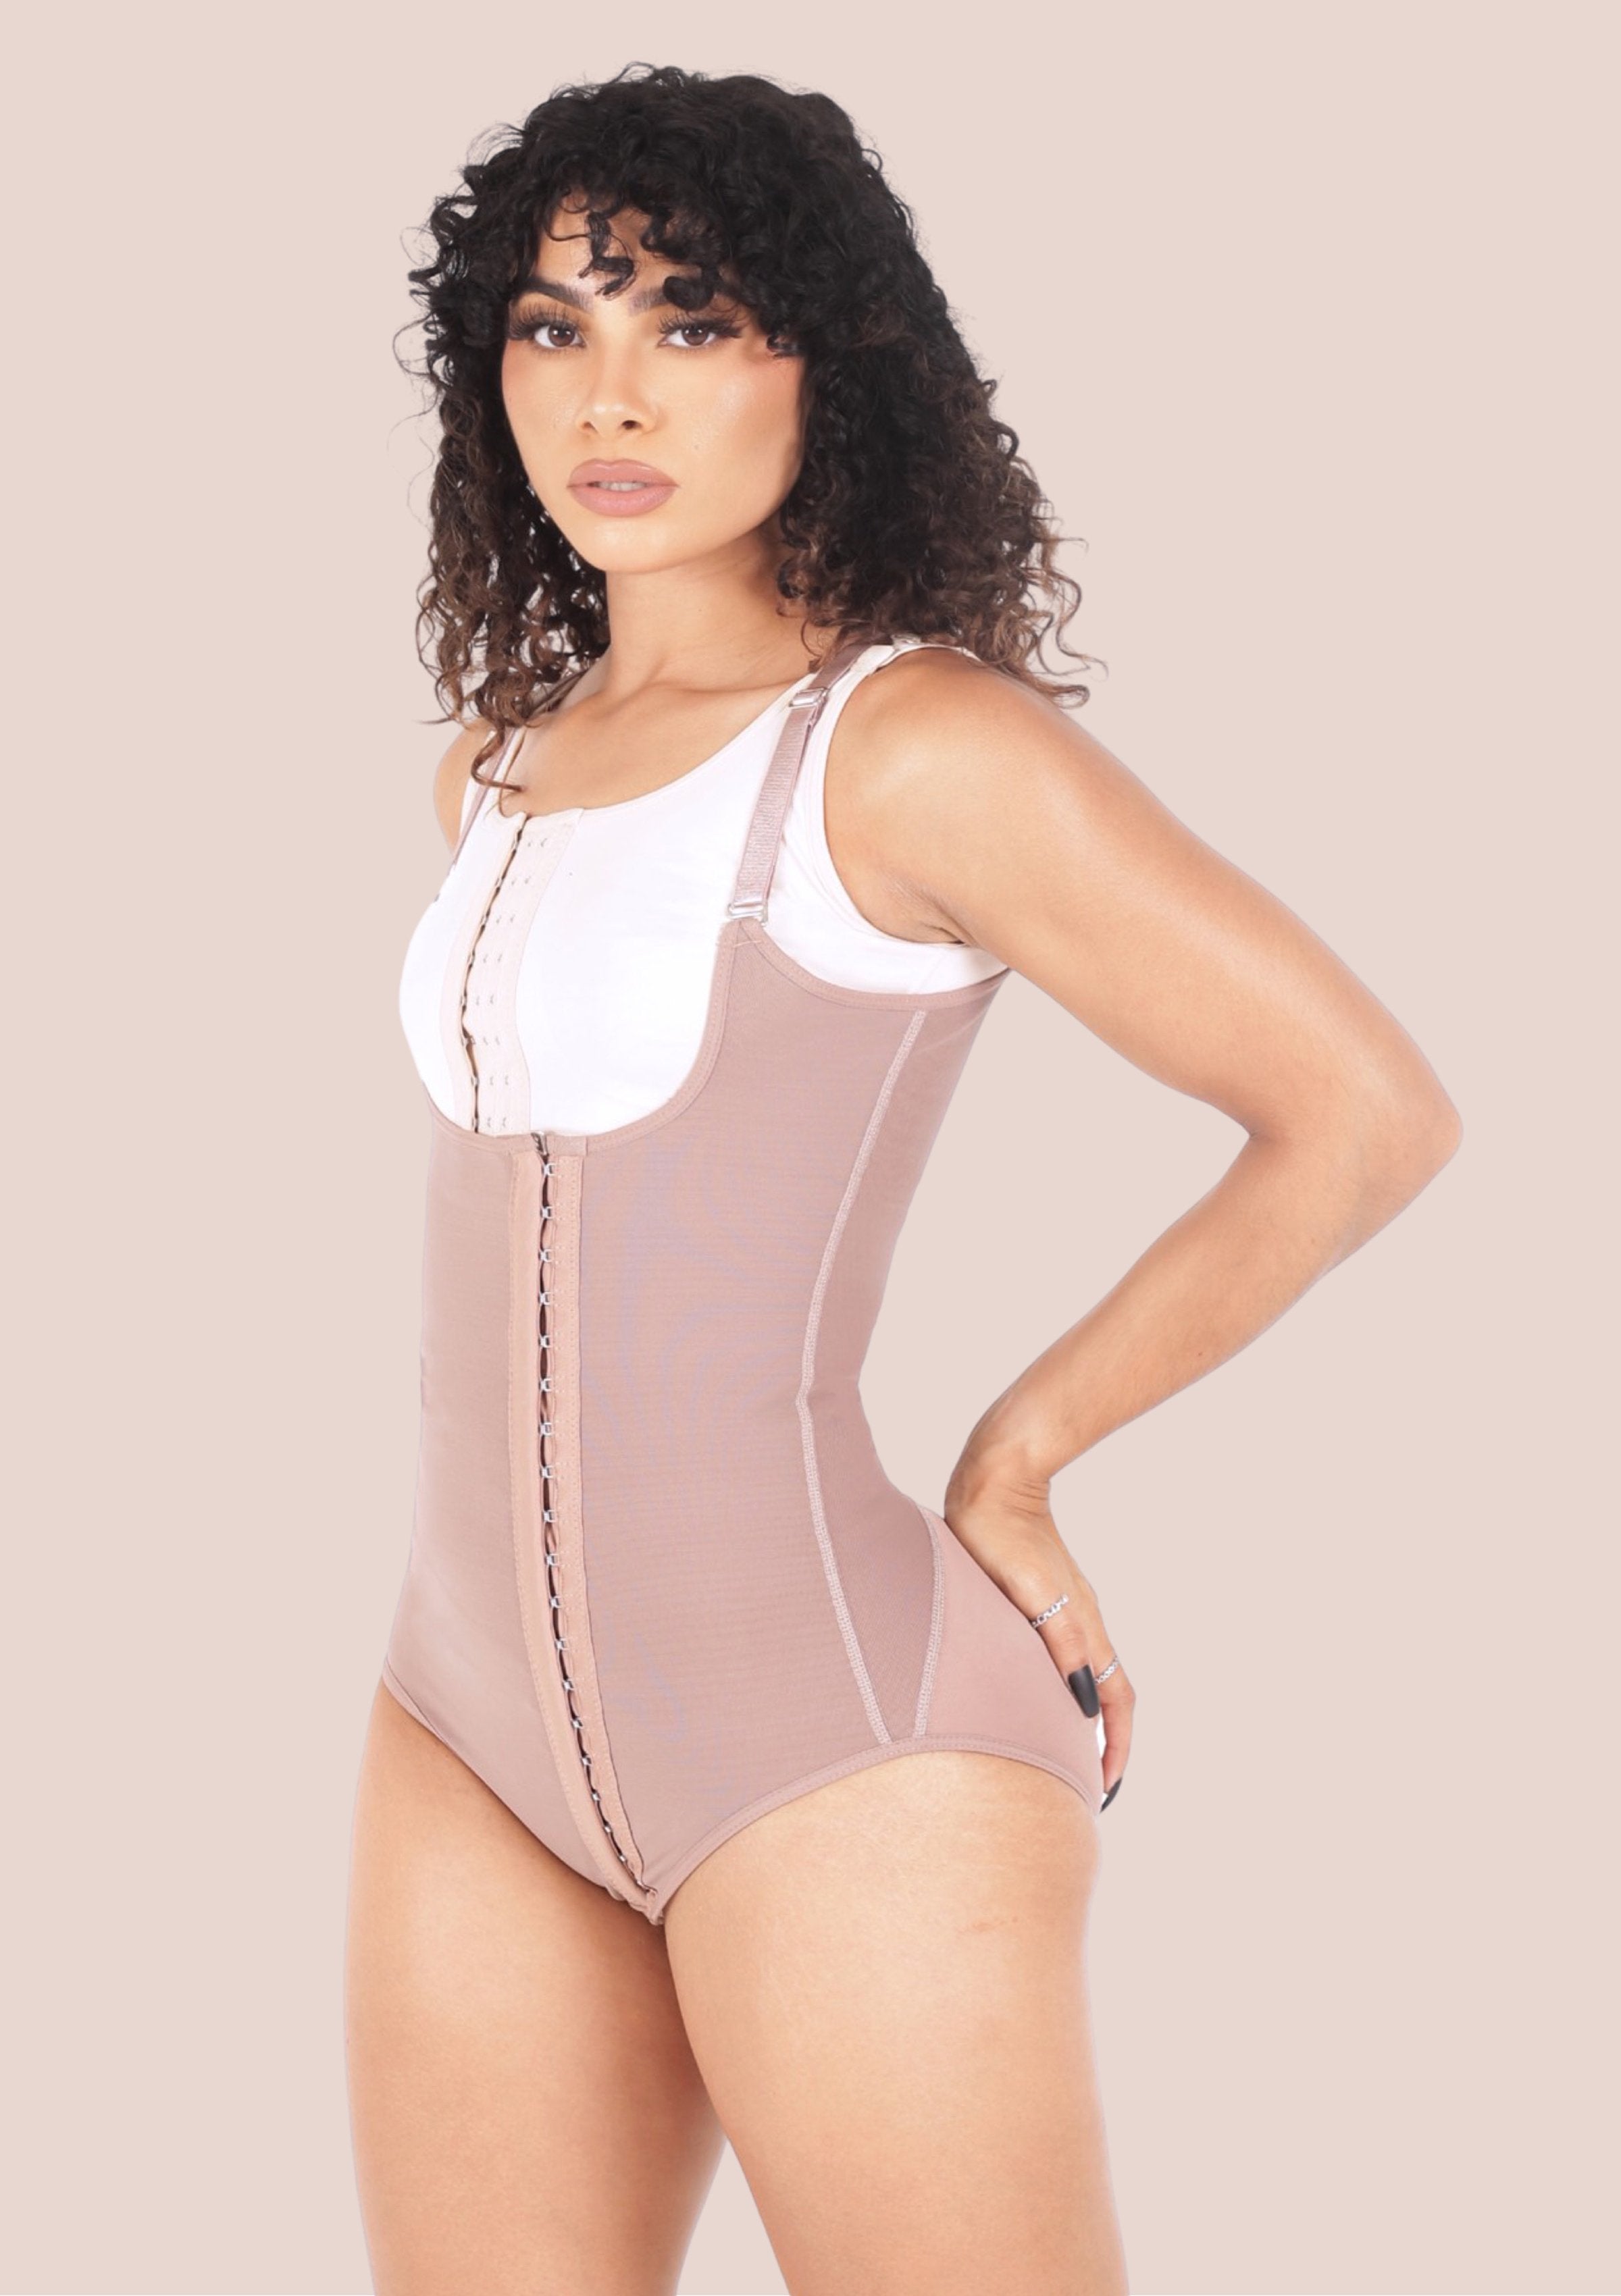 Analise Medium Pink High Compression Bodysuit, S